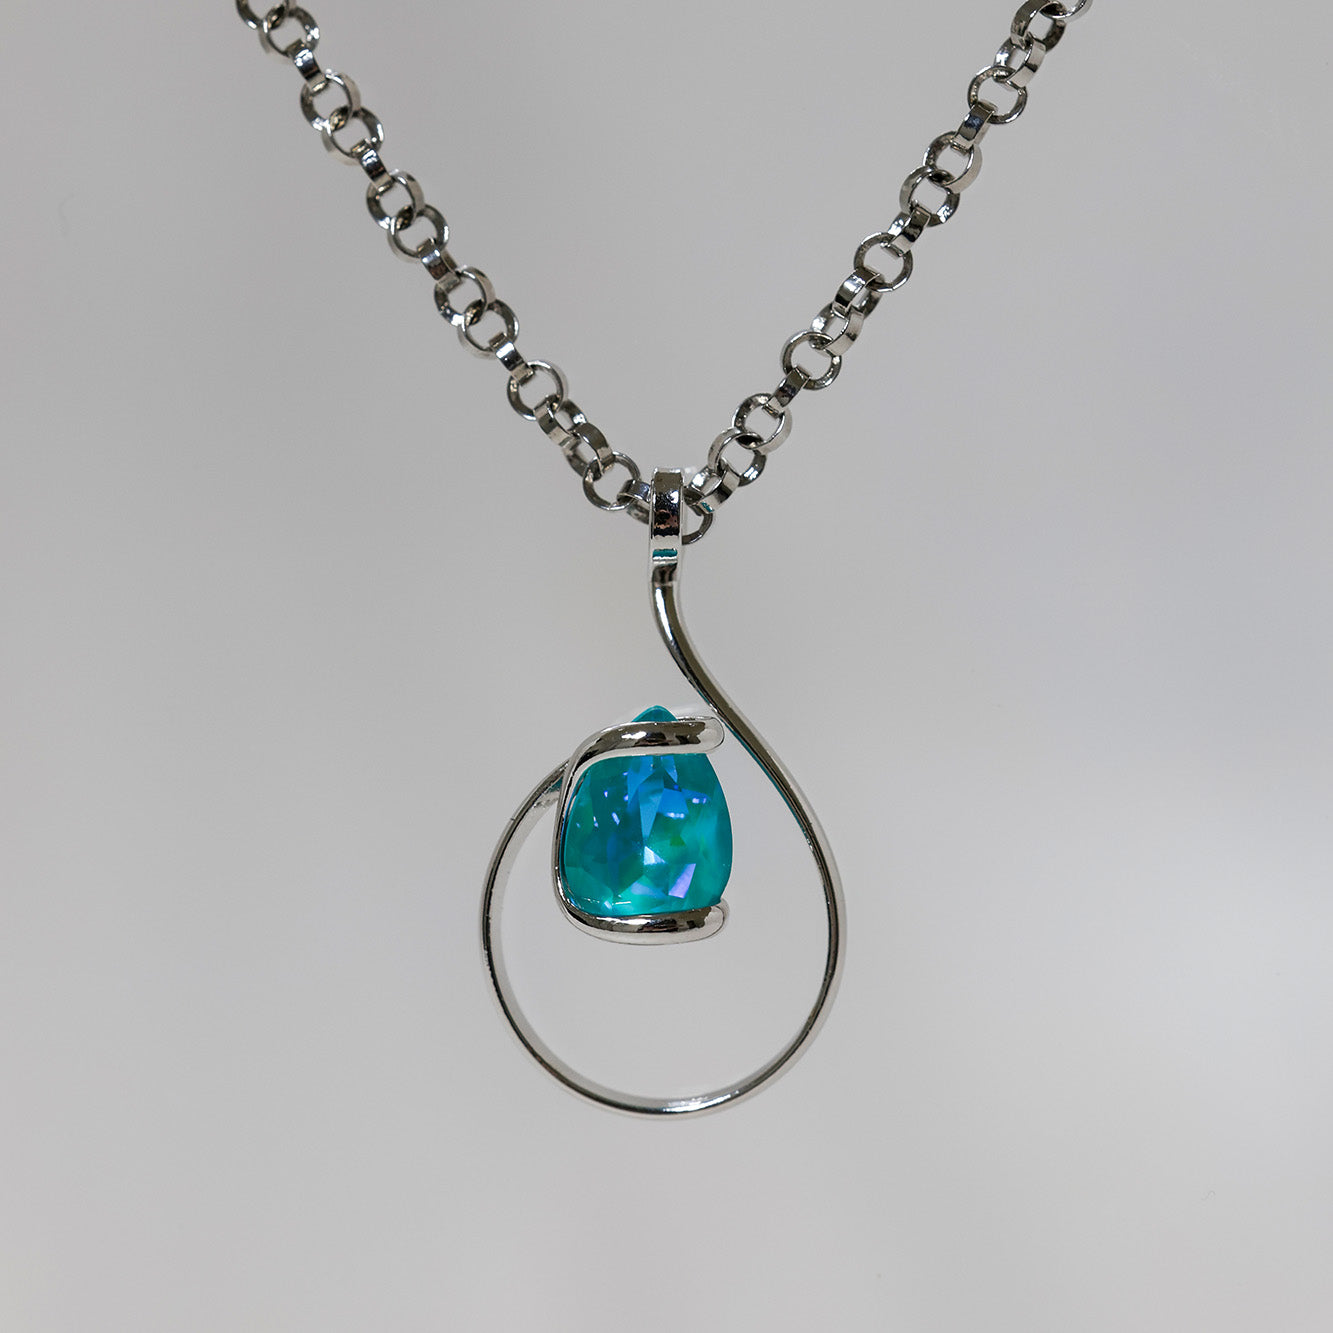 Turquoise Swarovski Crystal Monique Delite Necklace